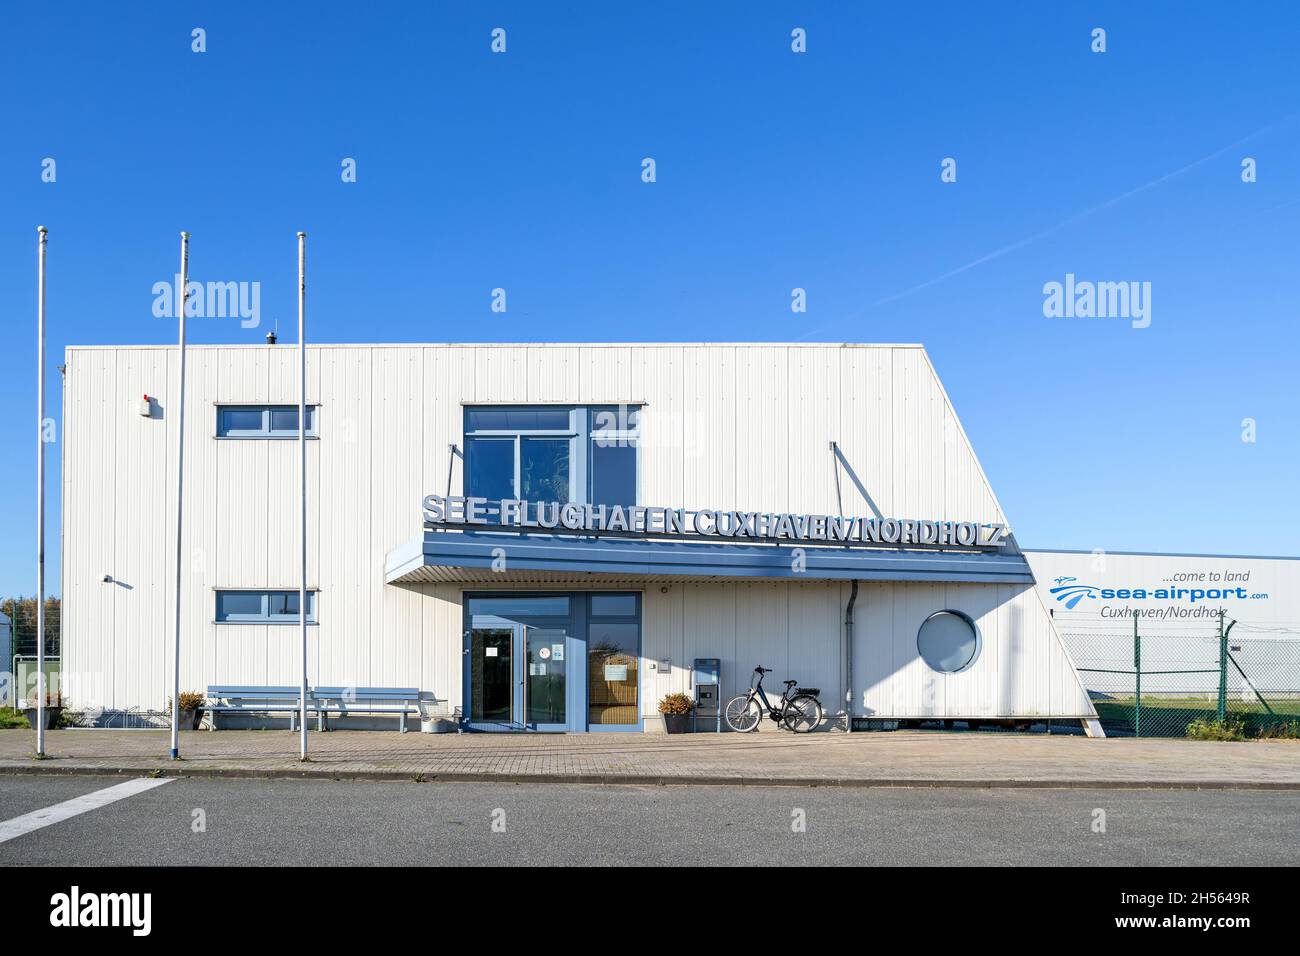 Terminalgebäude des See-Flughafen Cuxhaven/Nordholz Stockfoto